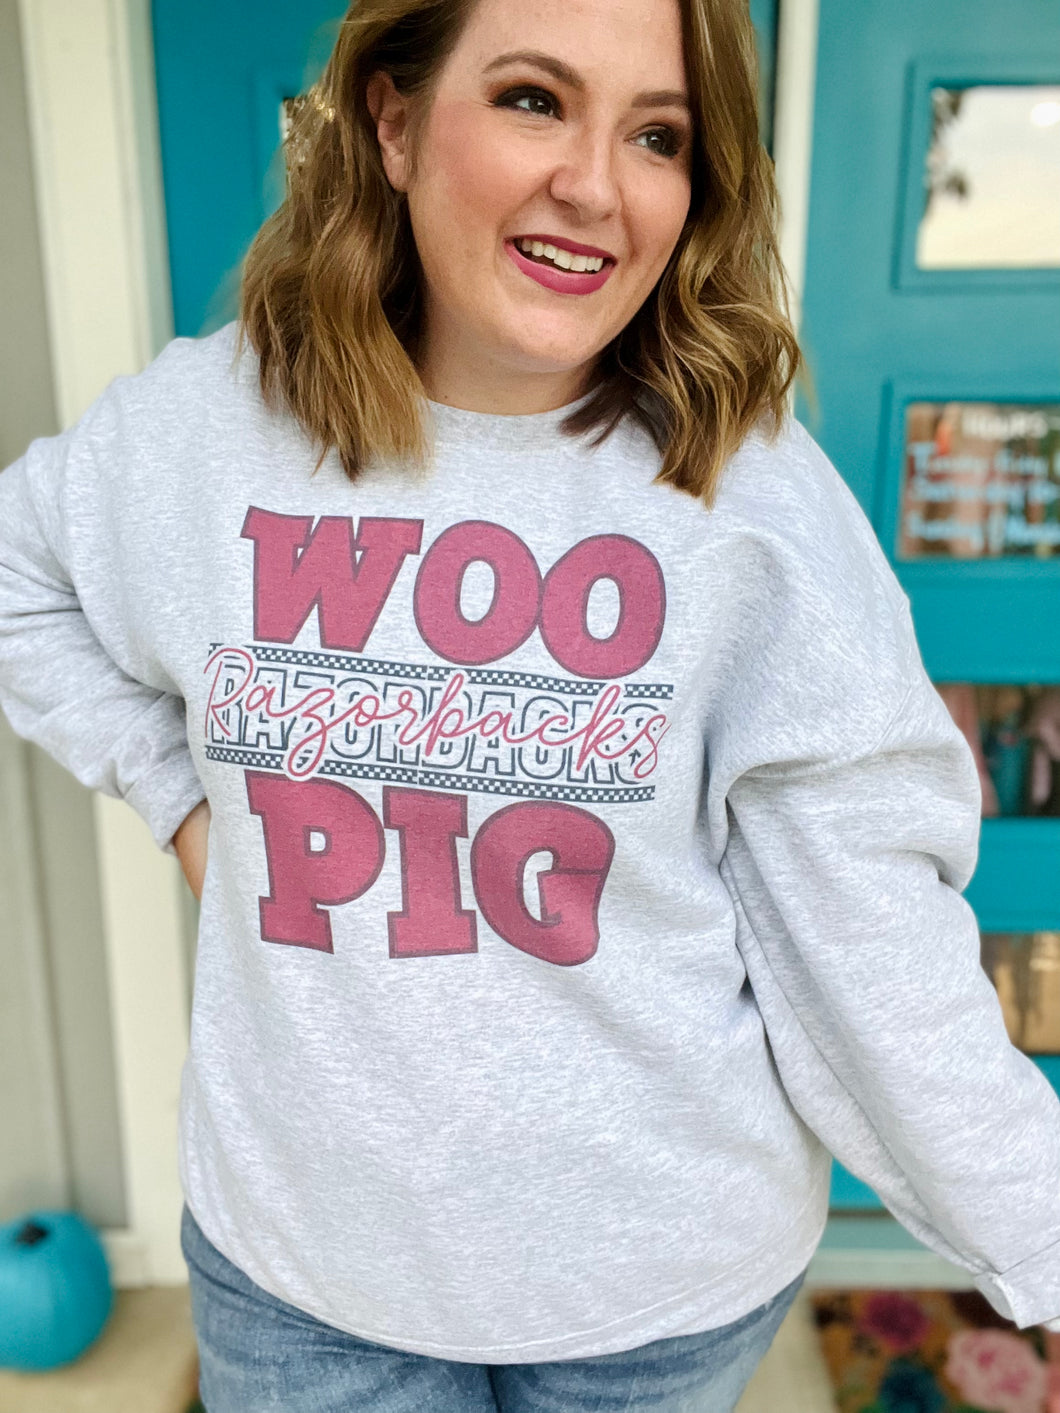 Woo Pig Checkered Graphic (Tee or Sweatshirt)